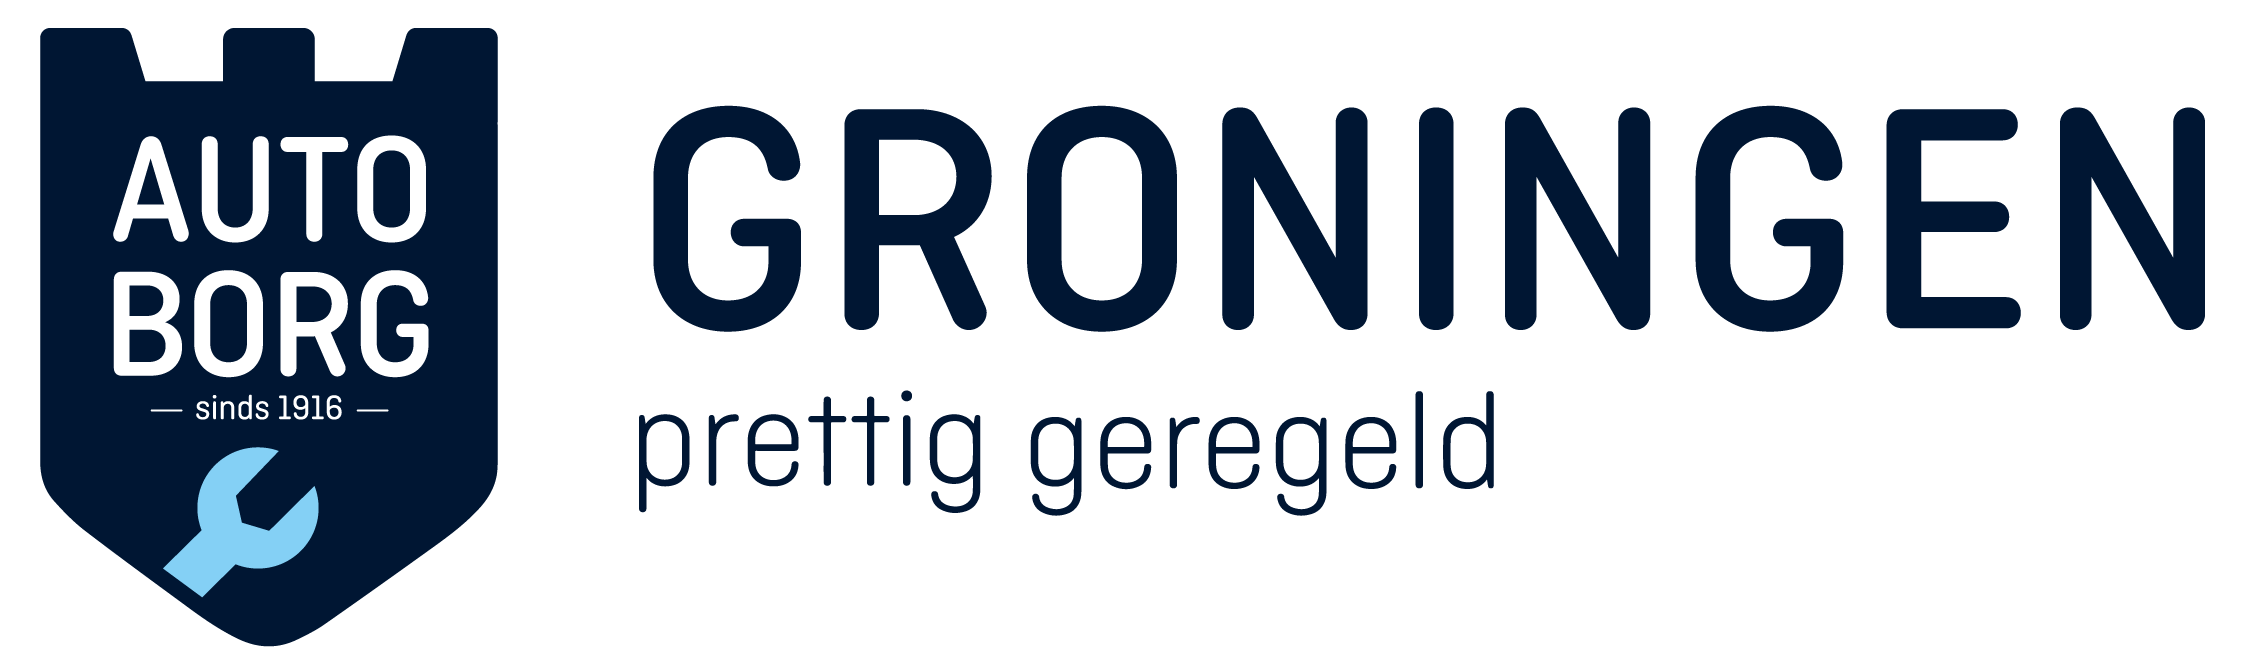 Autoborg-Groningen-logo